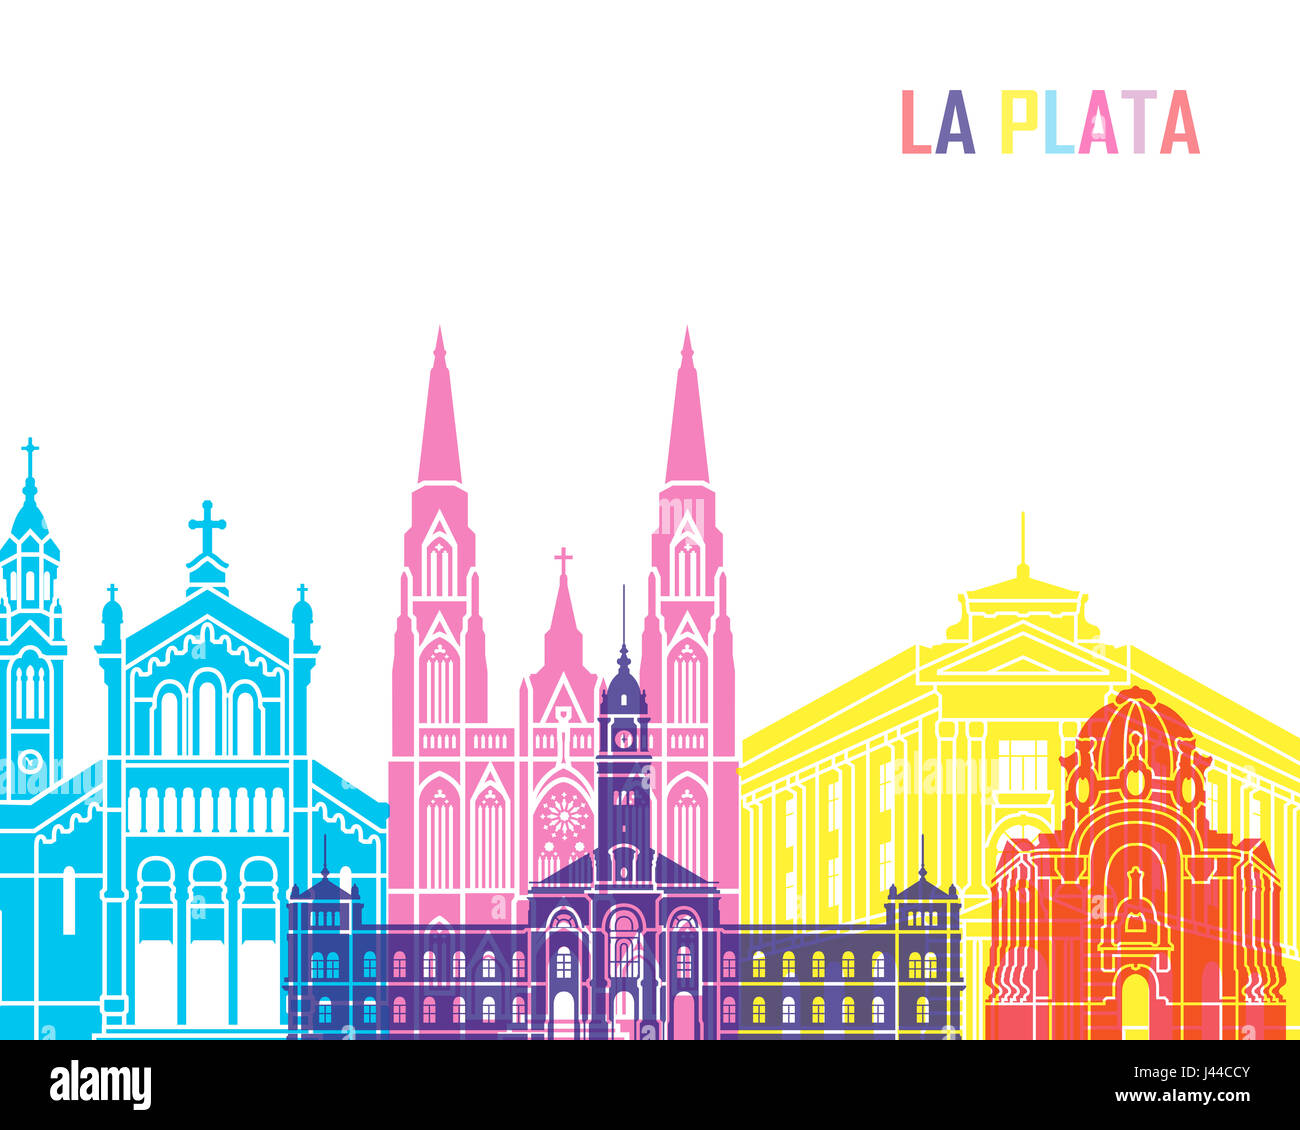 La Plata skyline pop in editable vector file Stock Photo